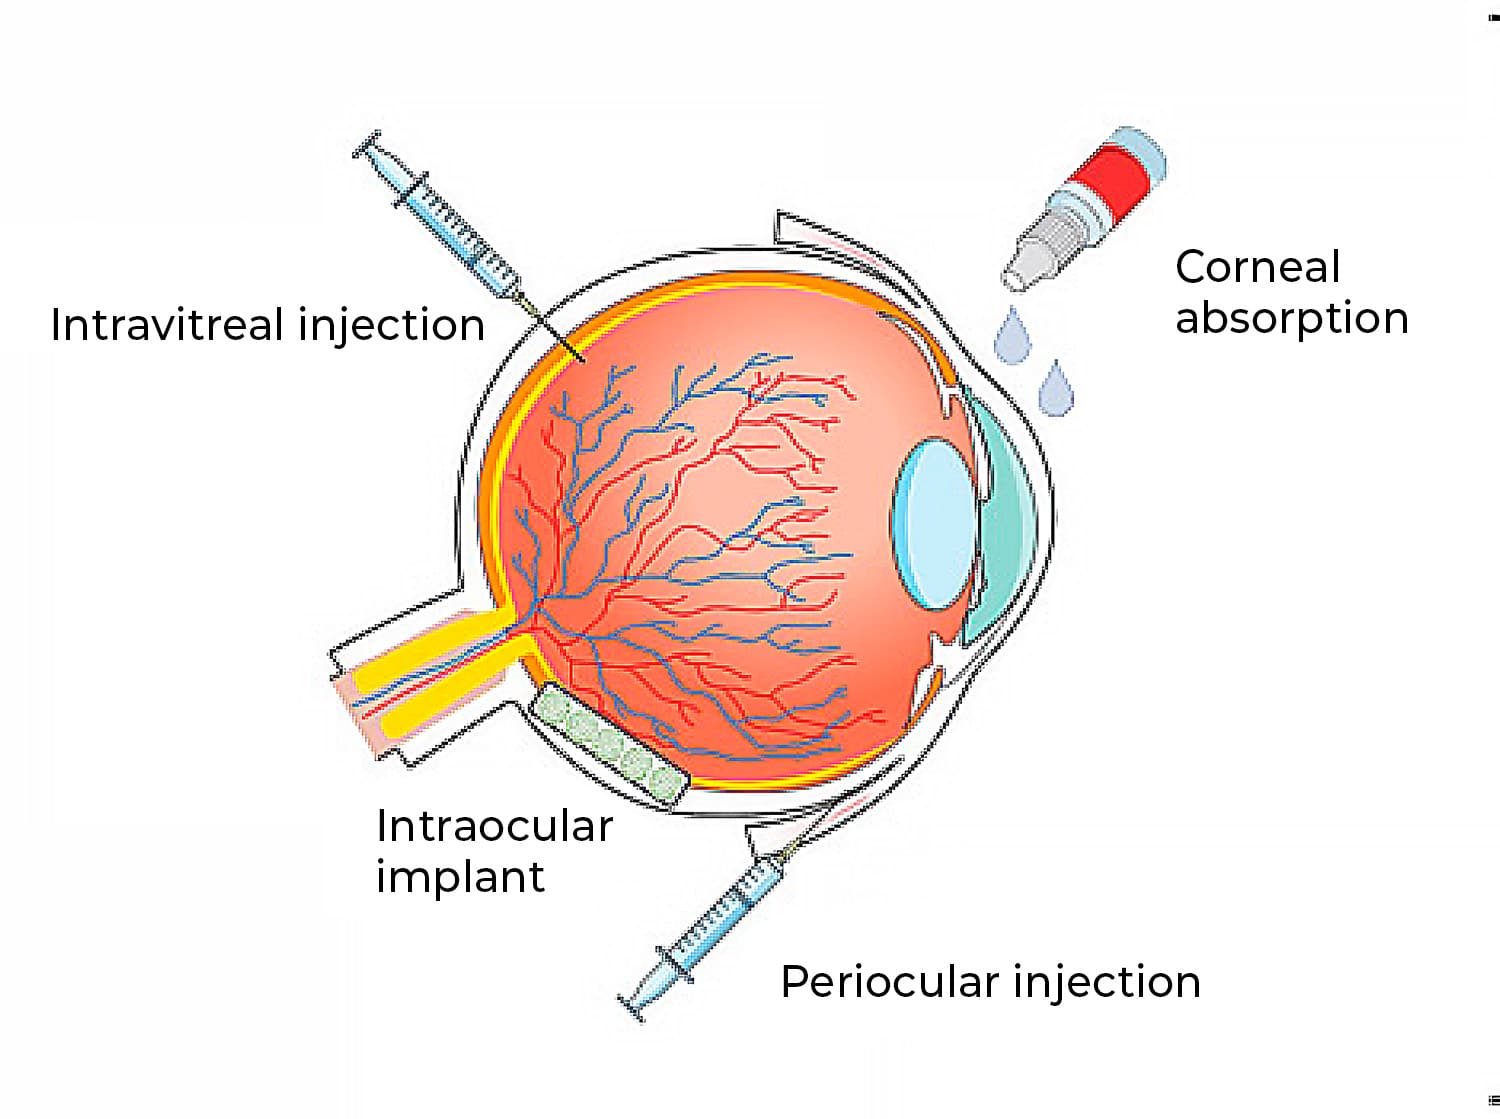 Ocular routes for drug delivery